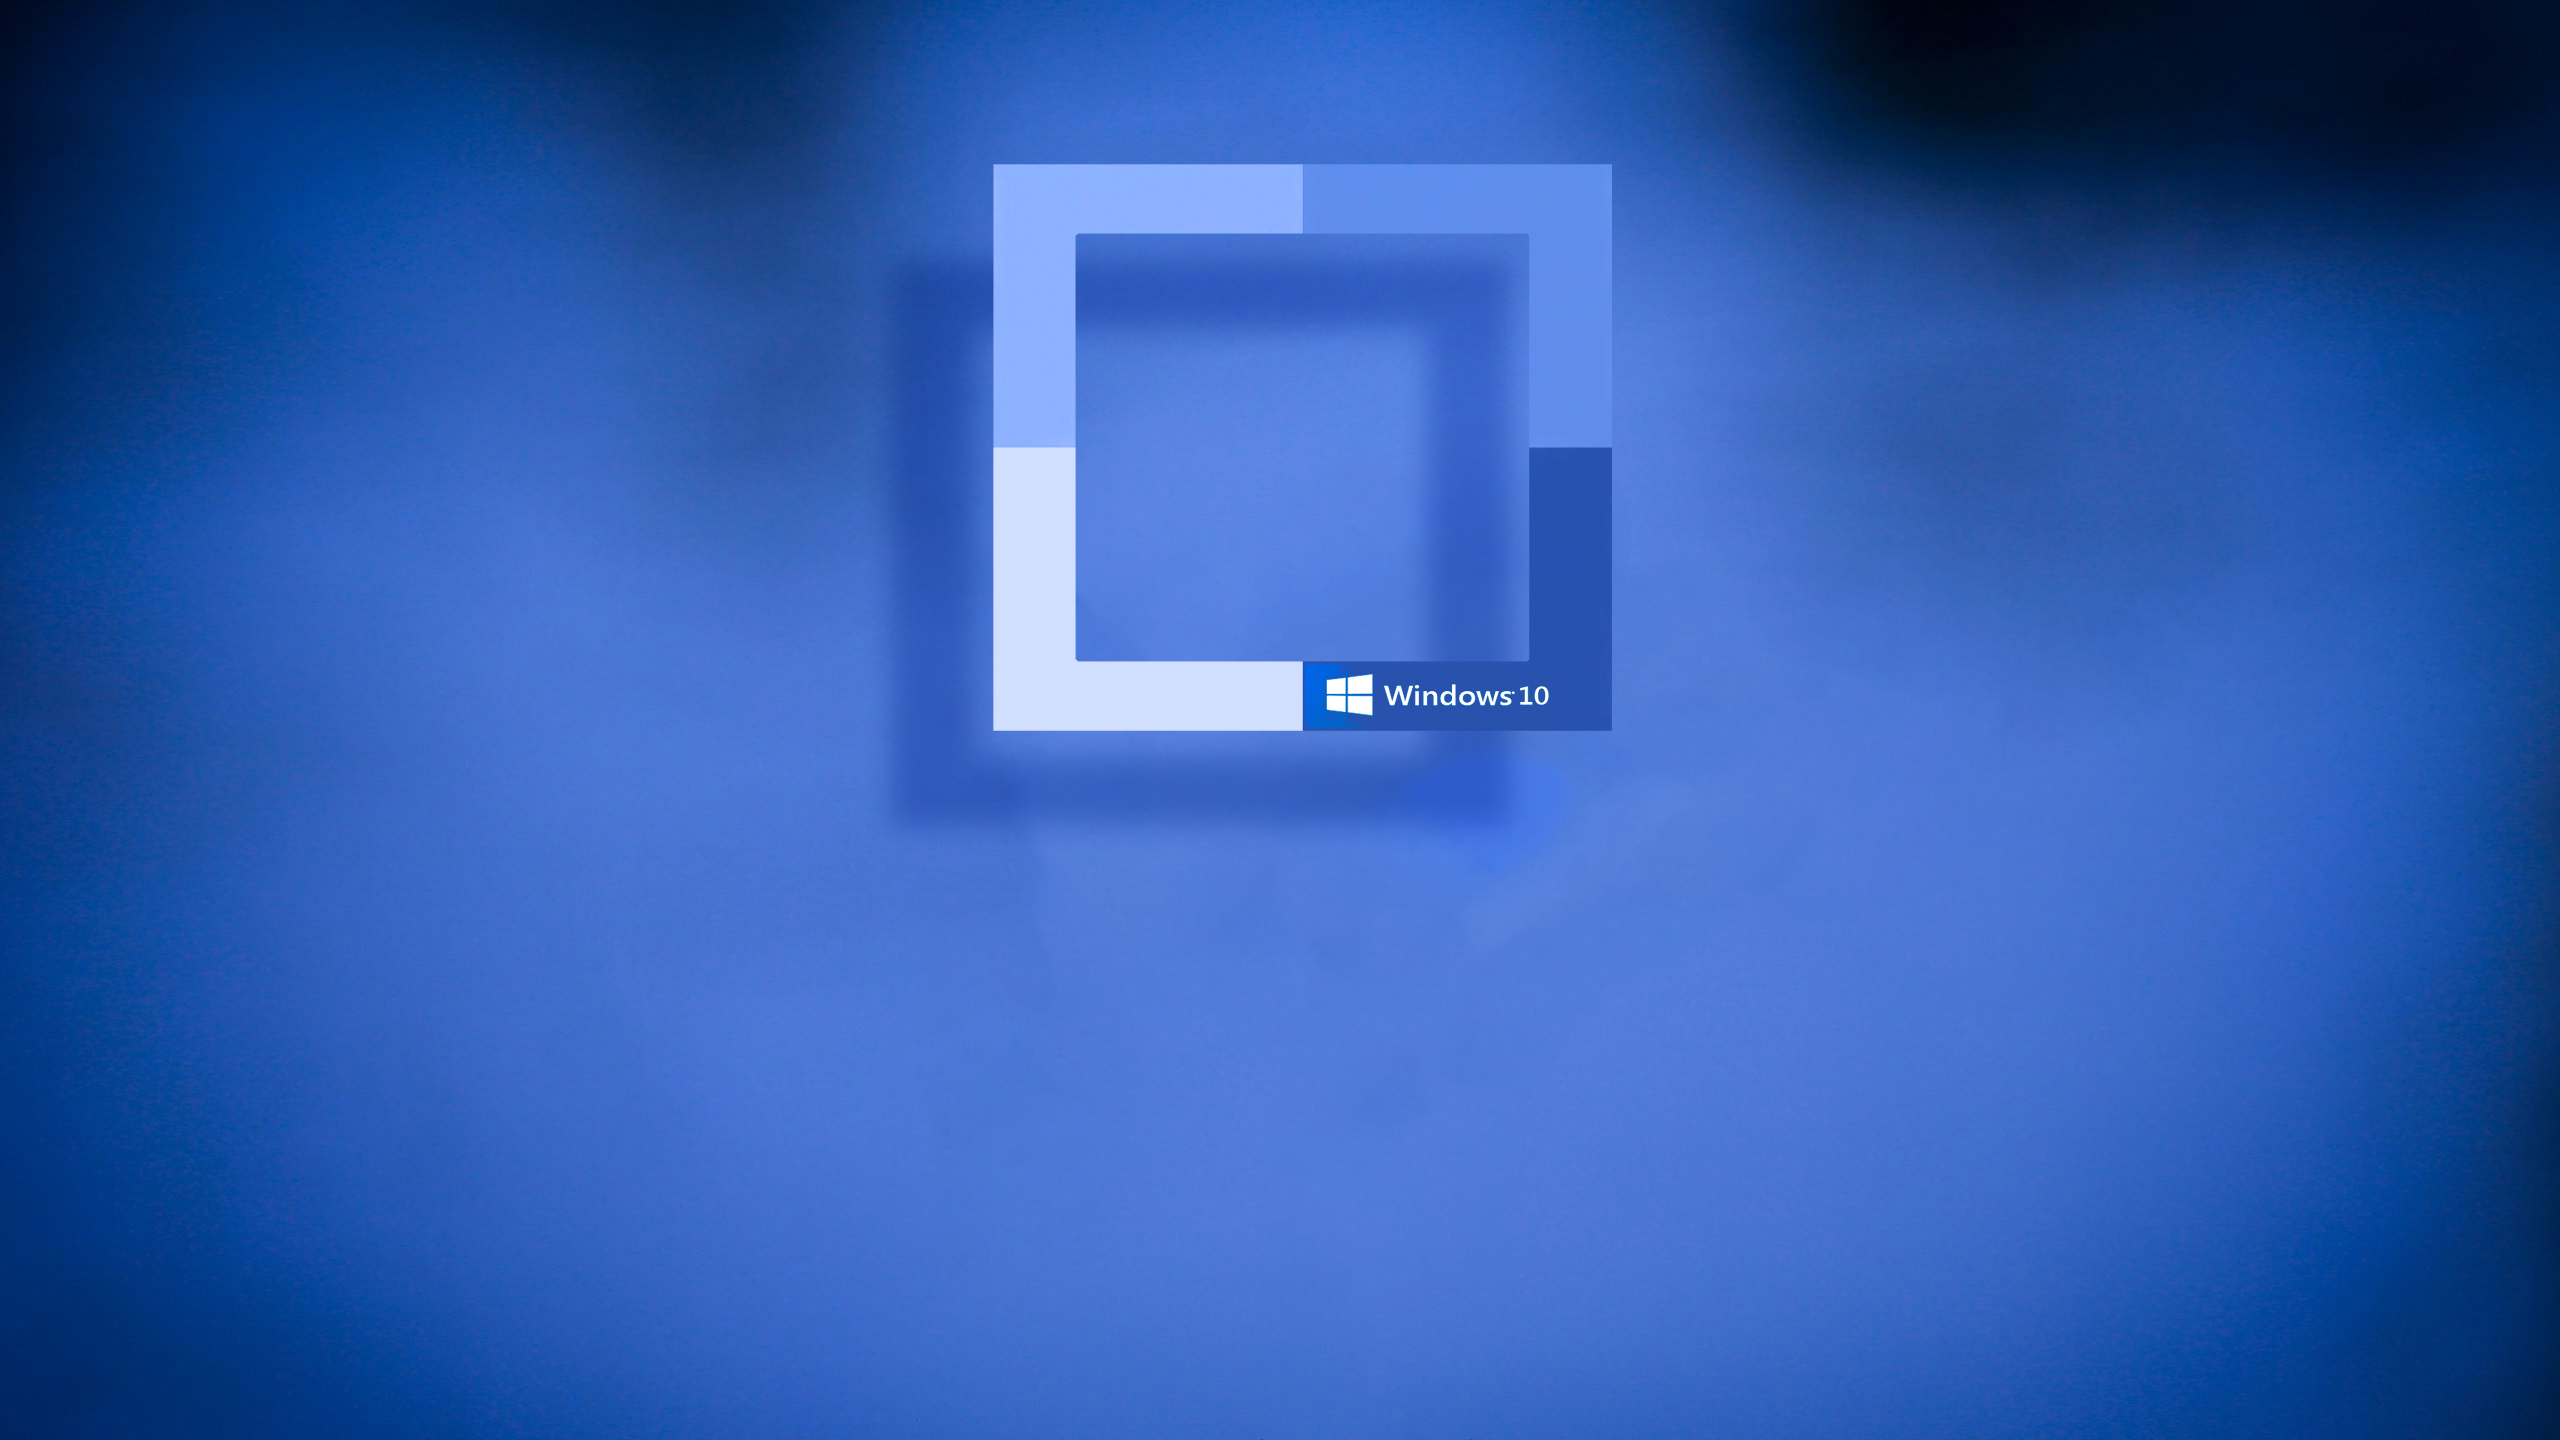 Windows 10 Wallpapers Desktop Backgrounds   5   HD Wallpapers